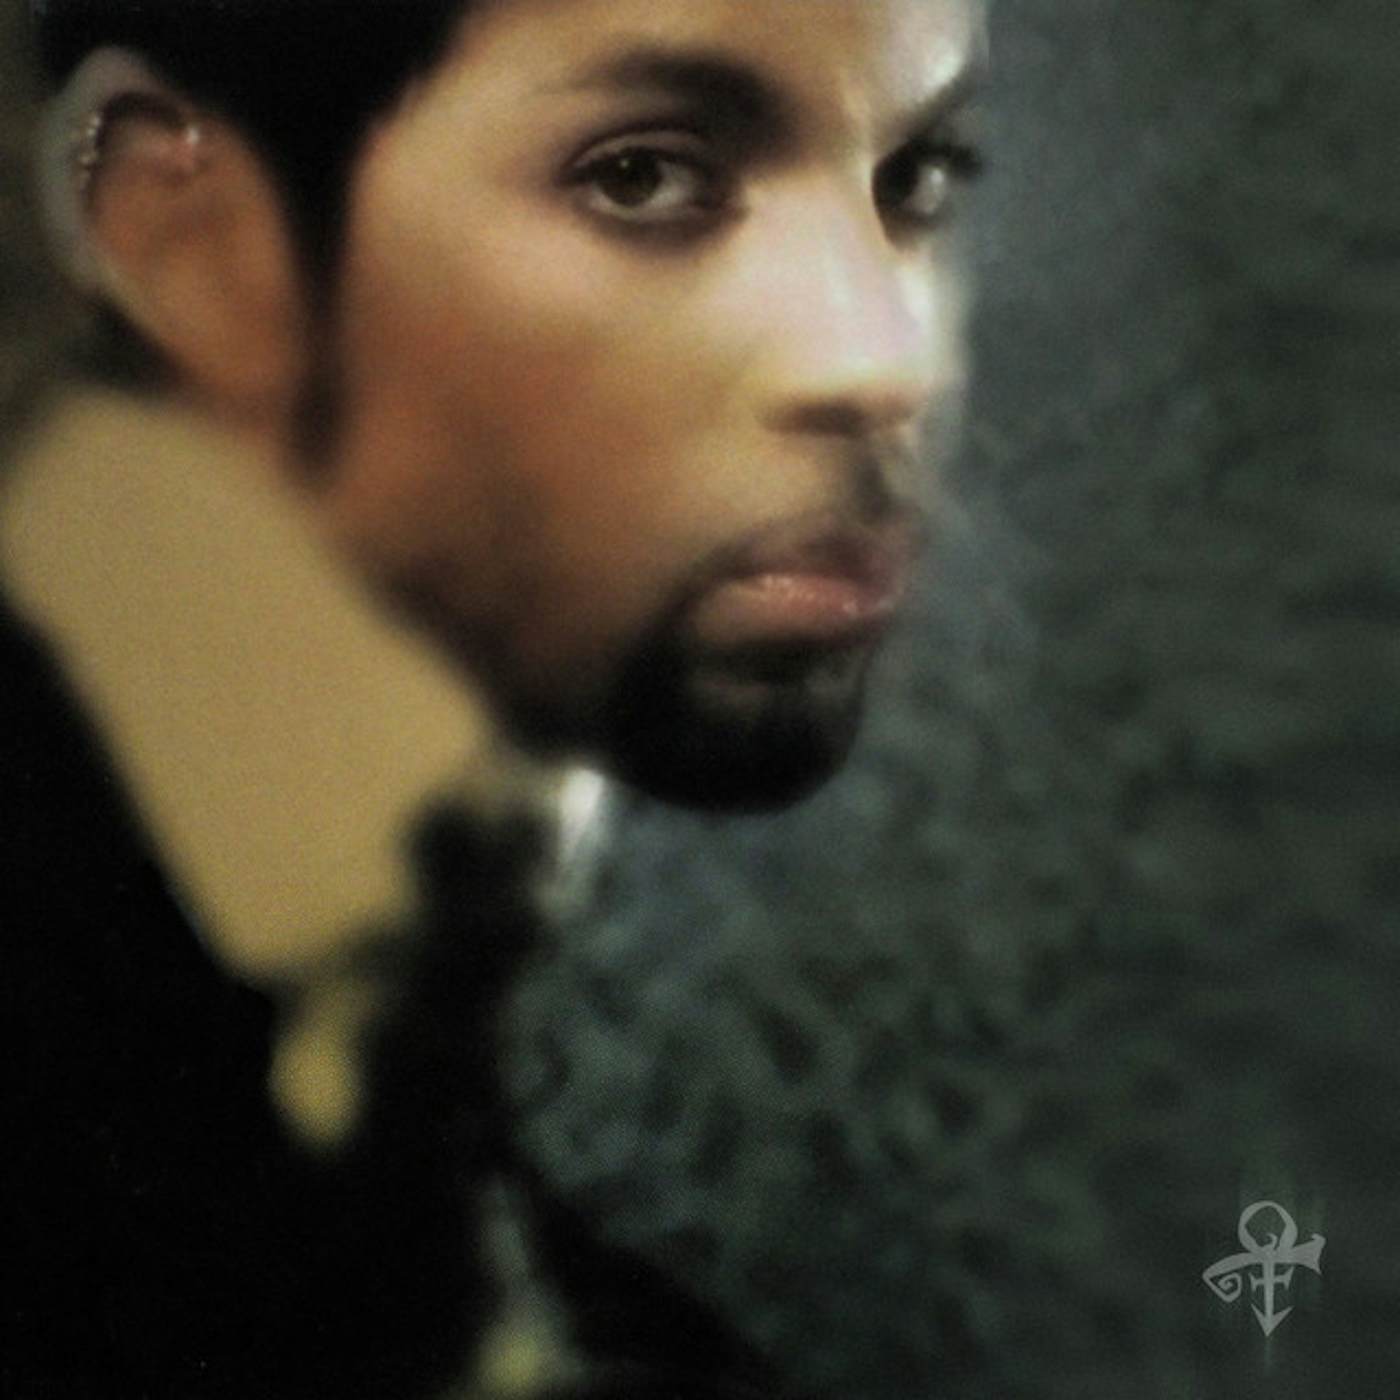 Prince Truth Vinyl Record